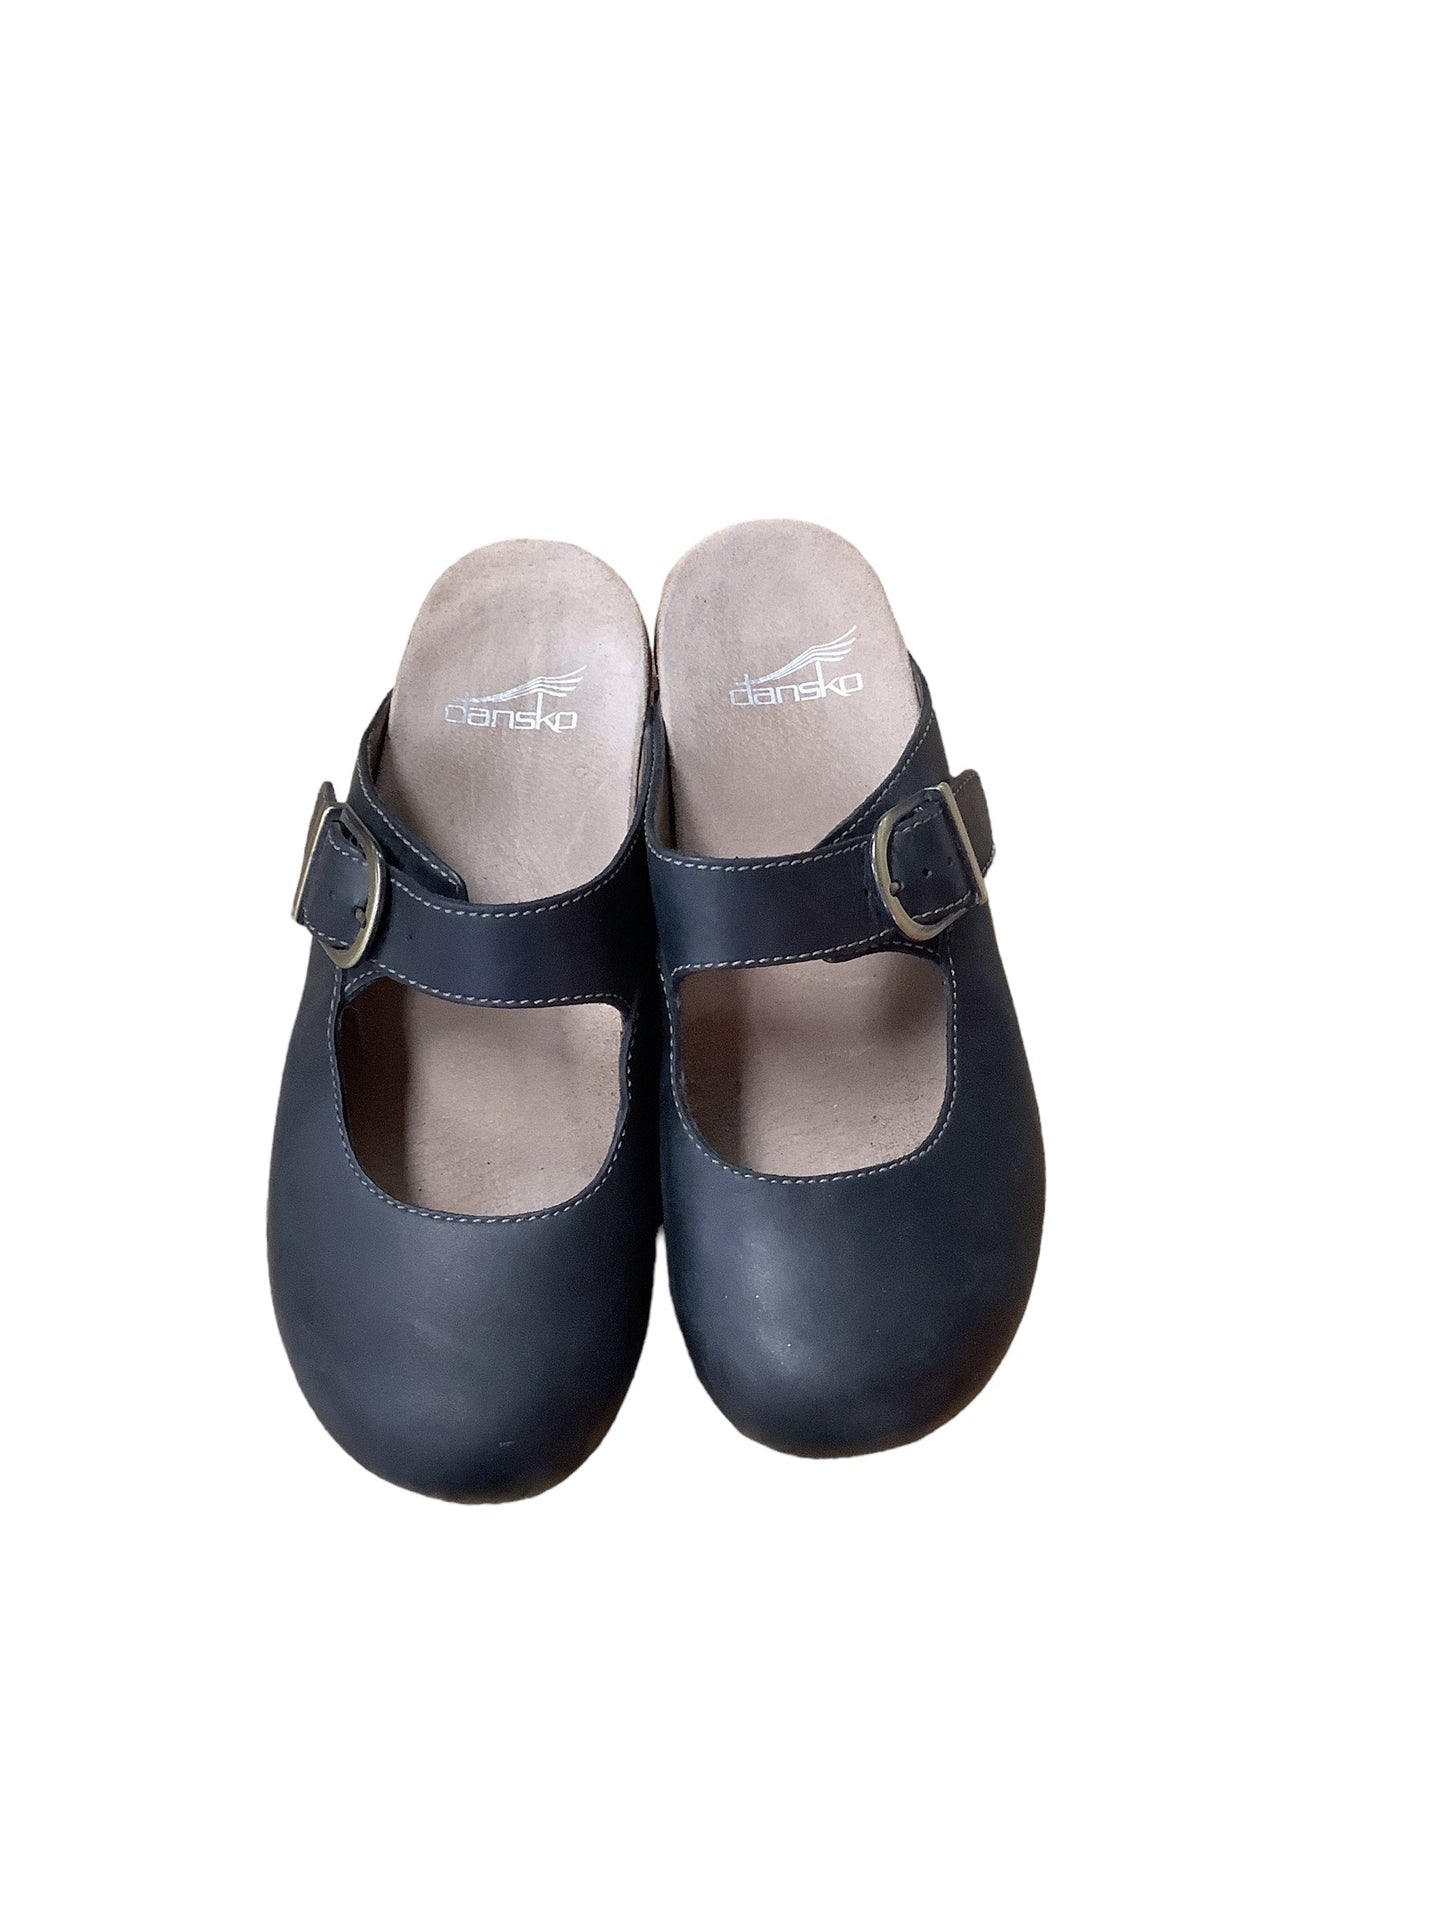 Black Shoes Flats Dansko, Size 5.5